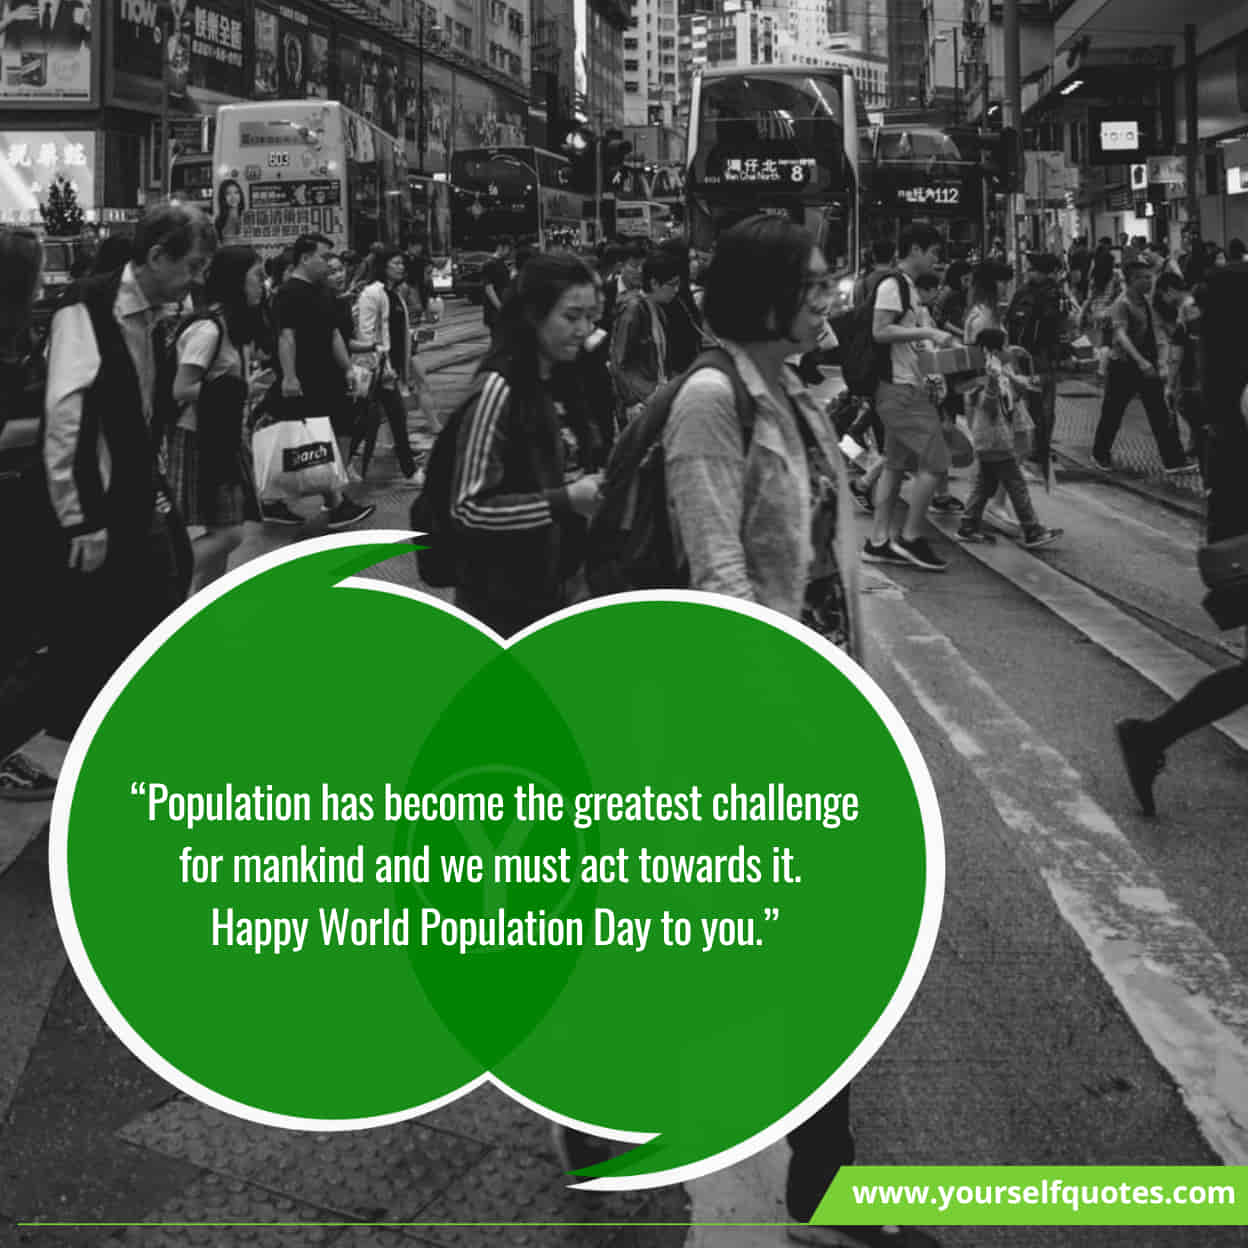 World Population Day Sayings & Greetings